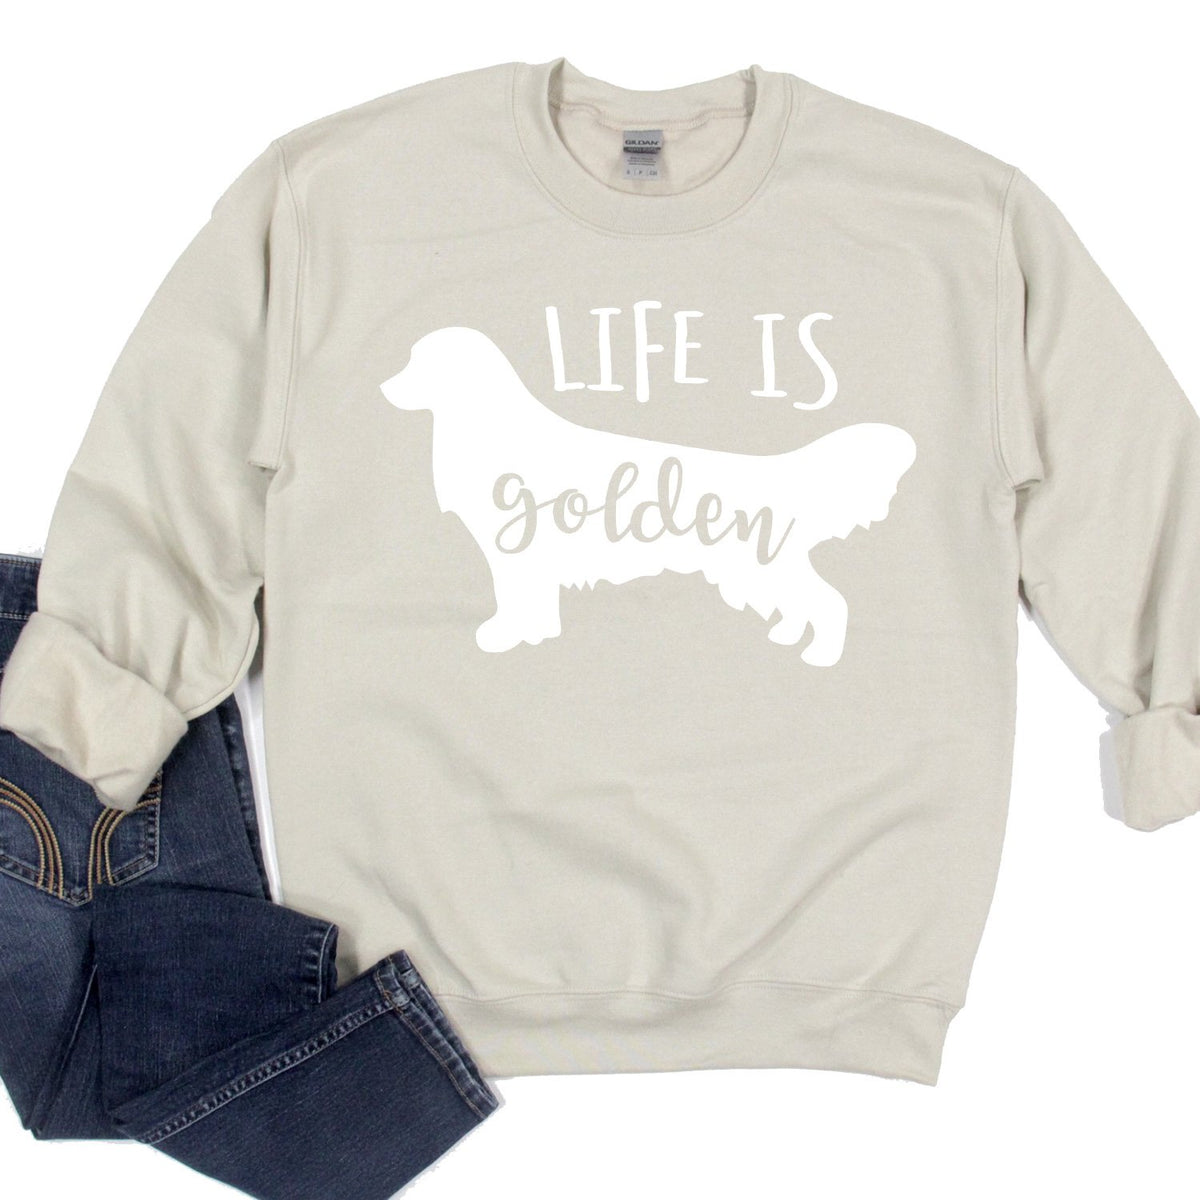 Life is Golden Retriever - Long Sleeve Heavy Crewneck Sweatshirt